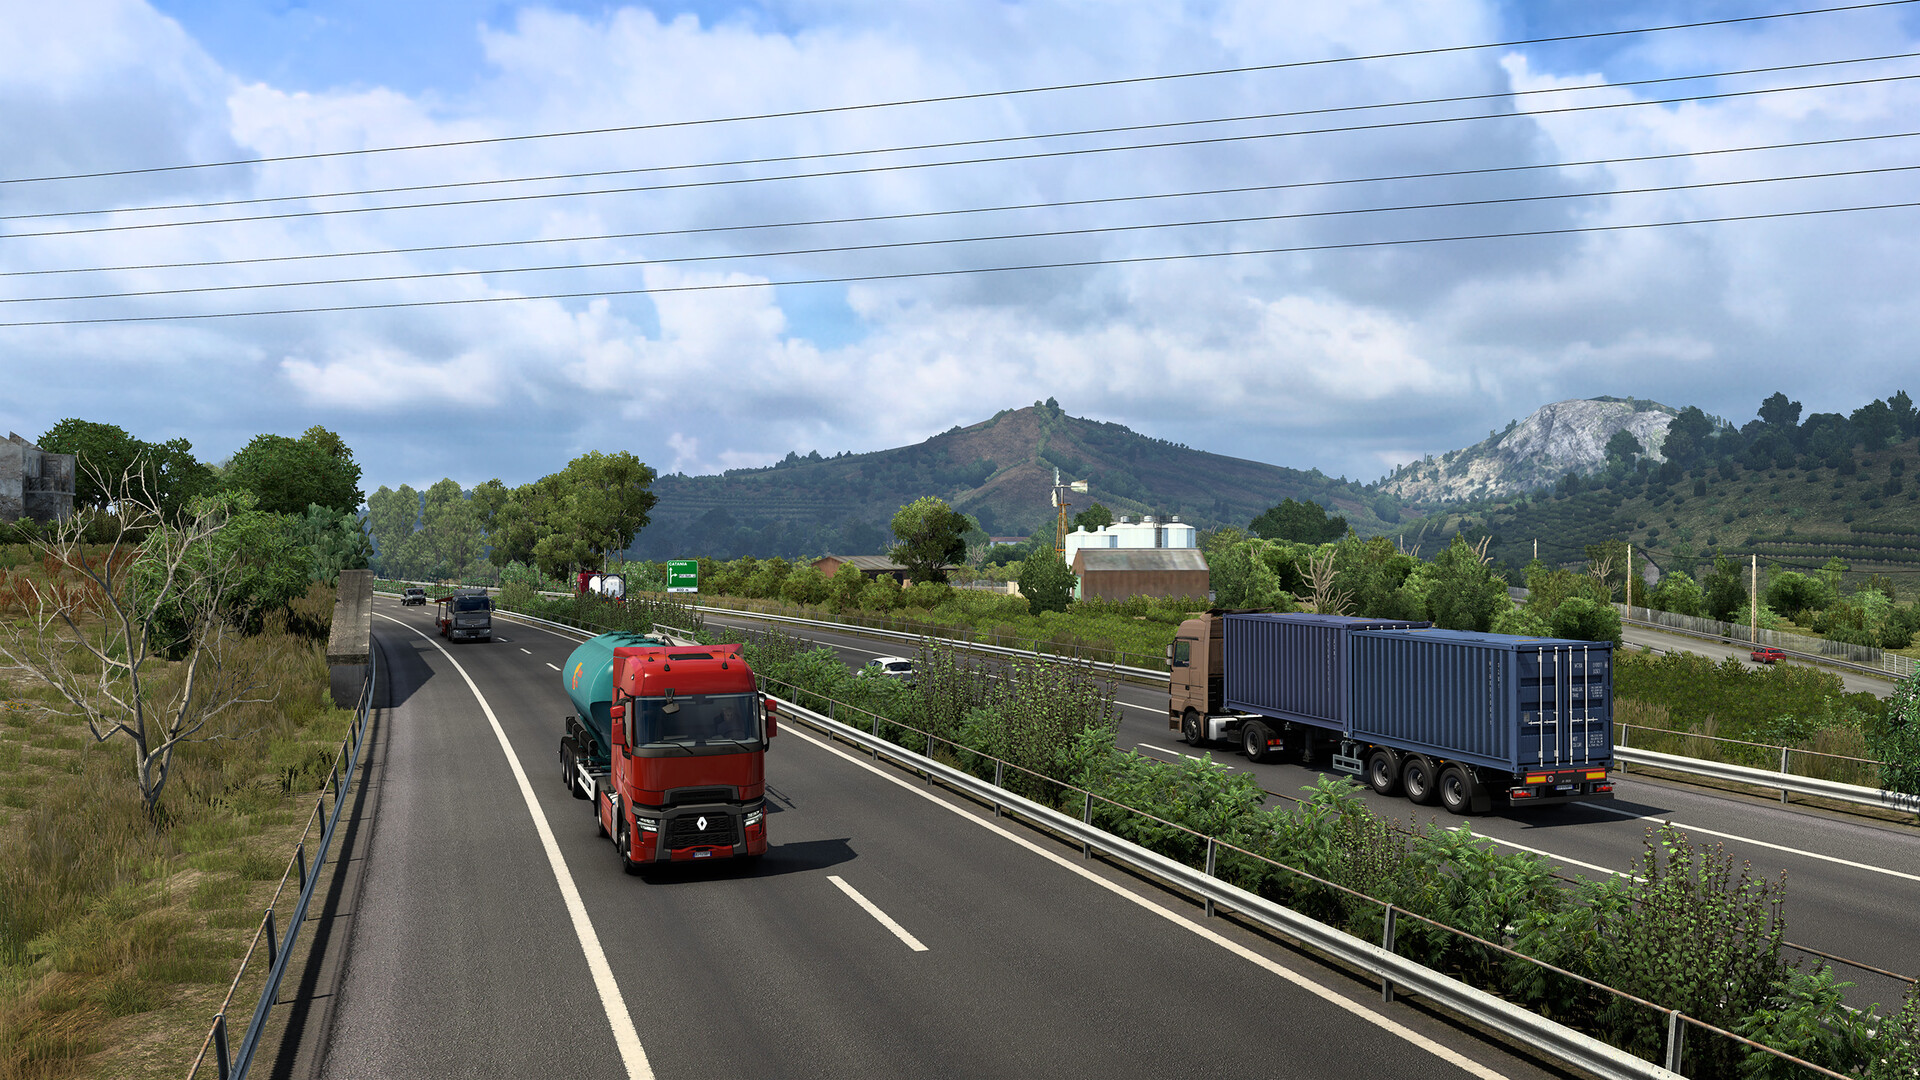 Euro Truck Simulator 2 - Italia on Steam